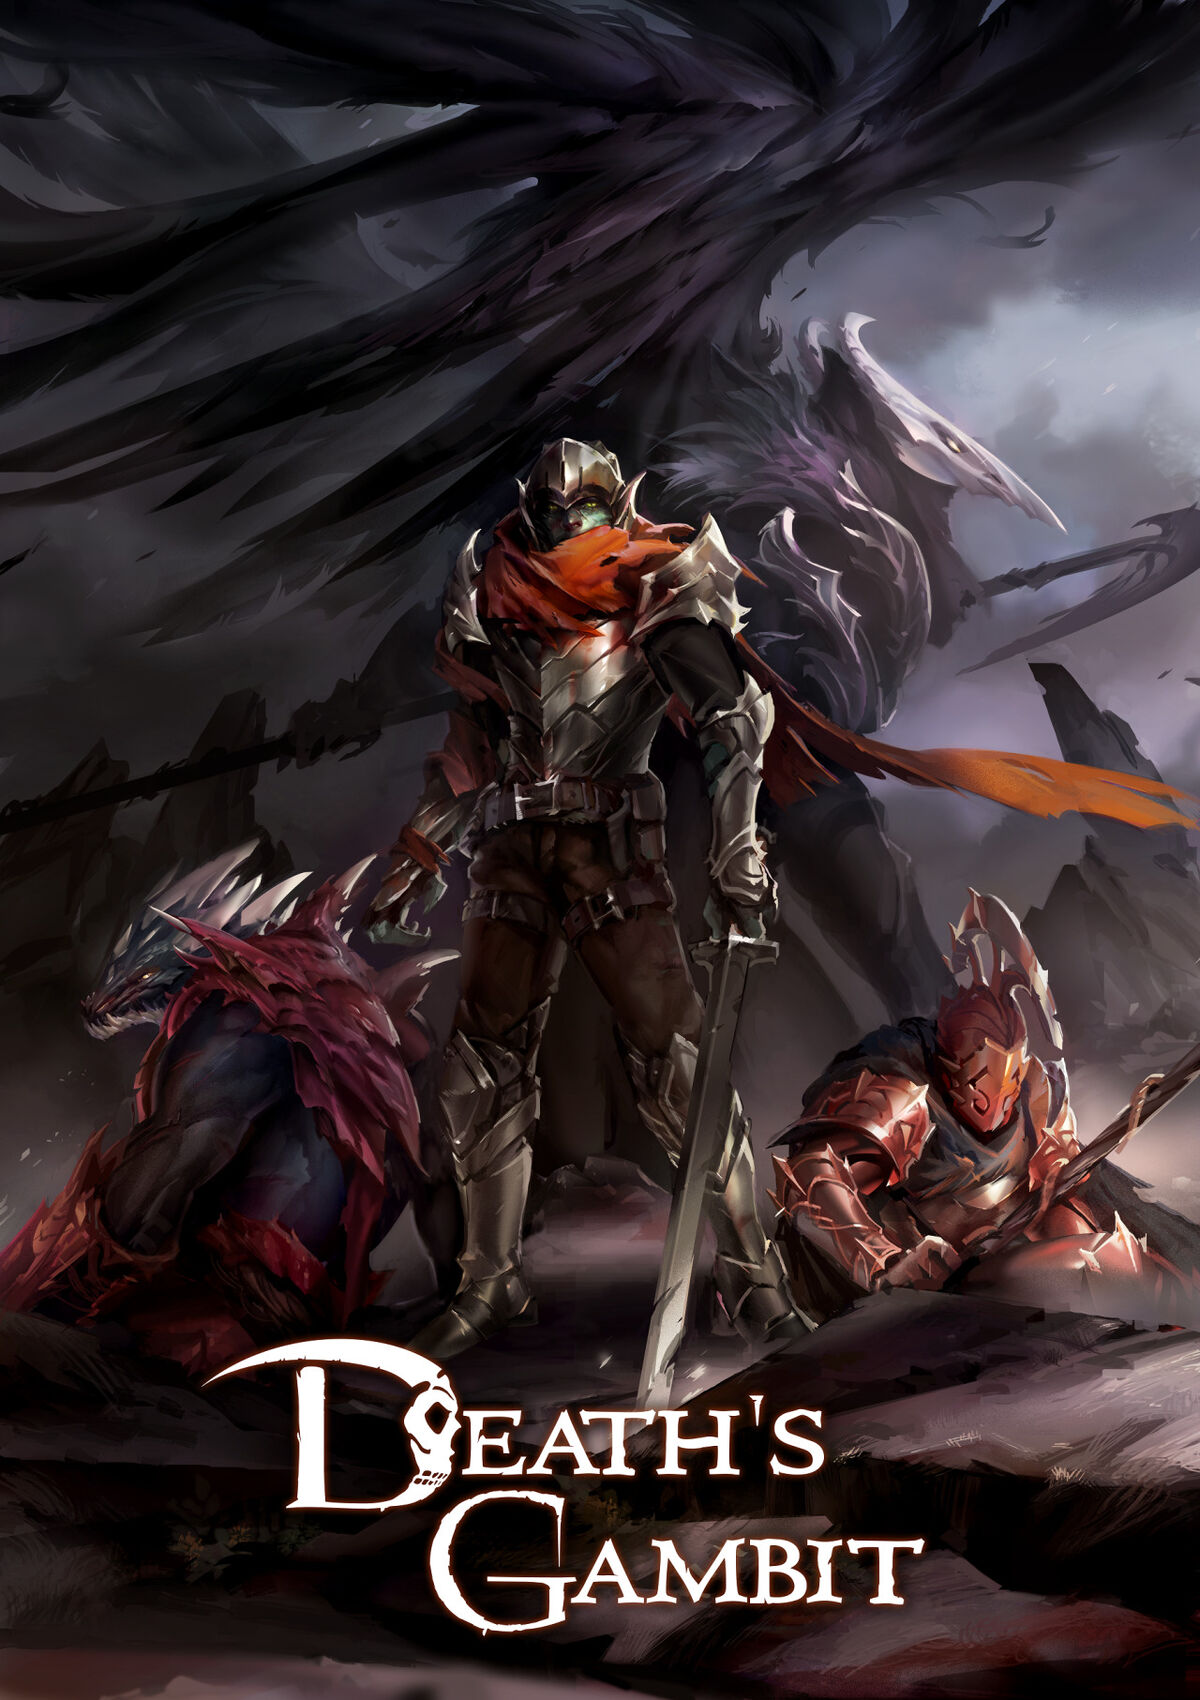 Death's Gambit Review: Death is Your New Best Friend – GameSpew